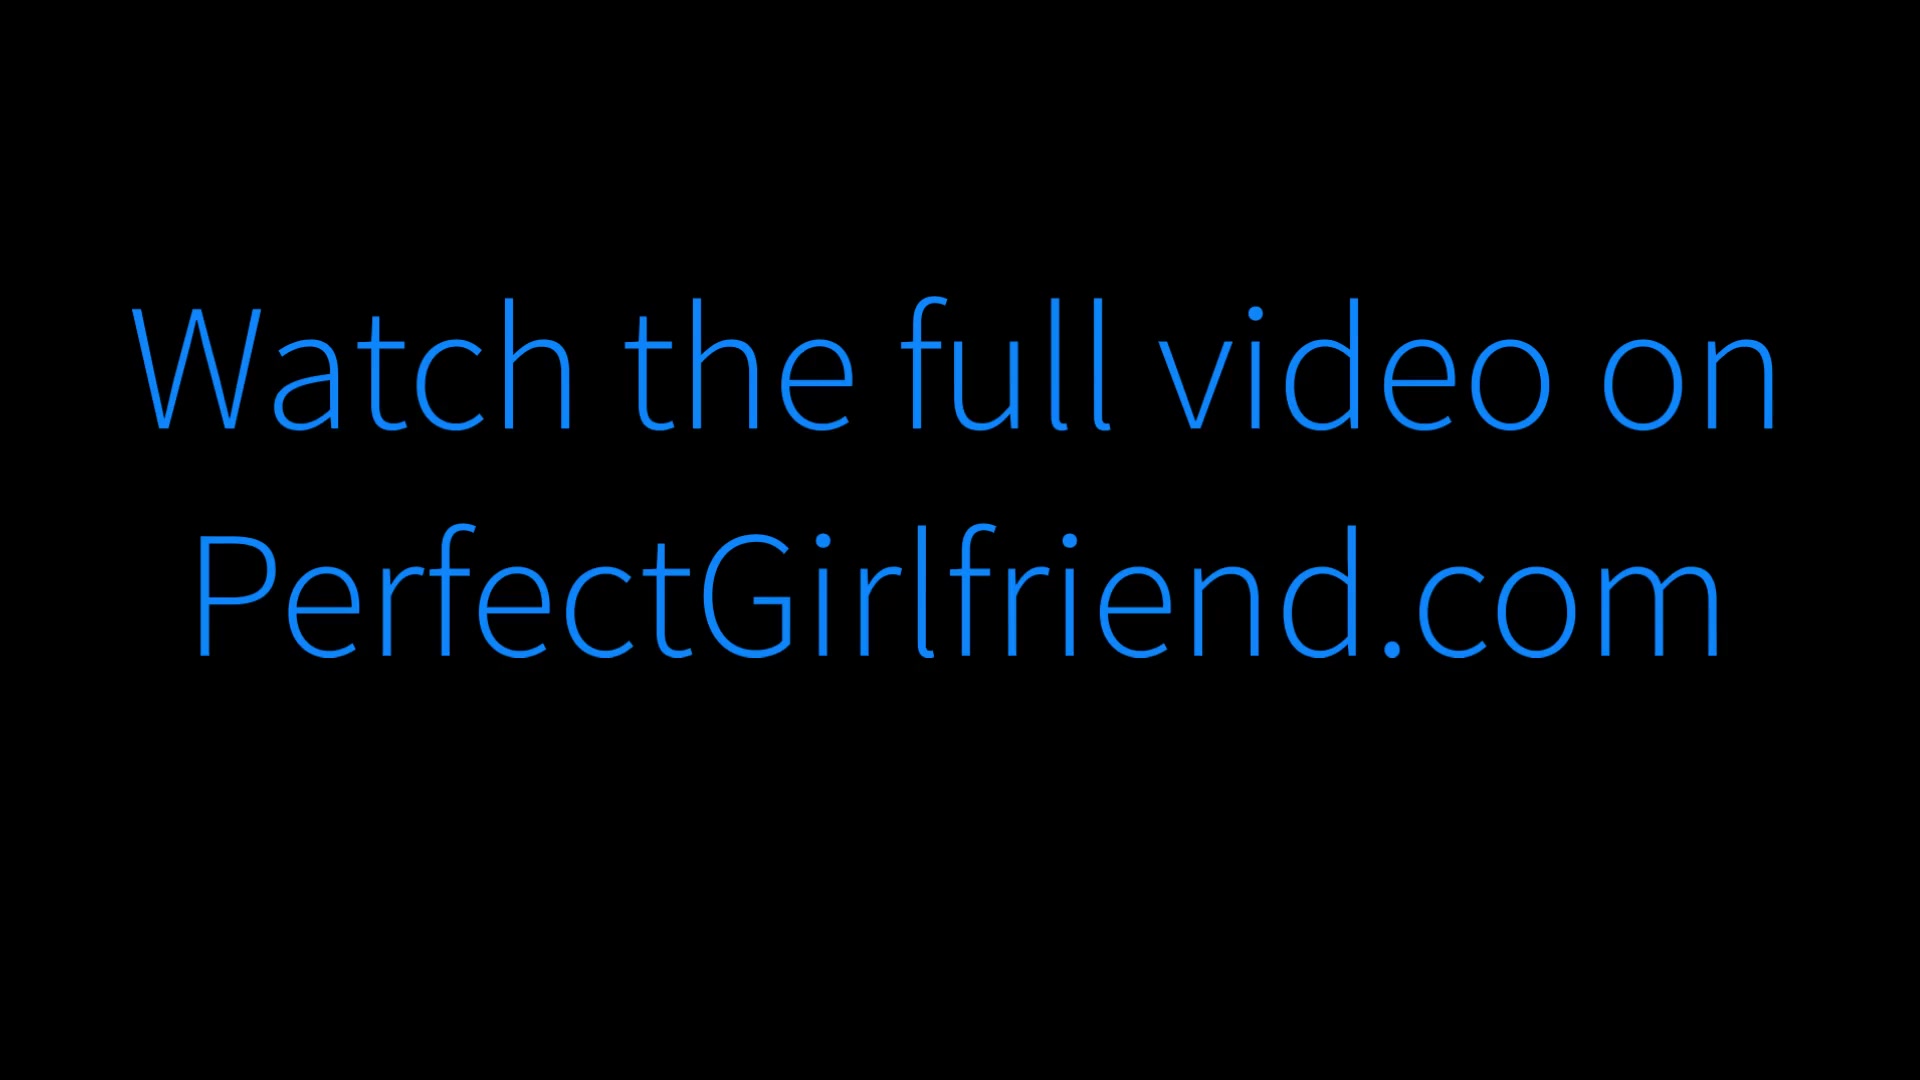 Perfectgirlfriend.com